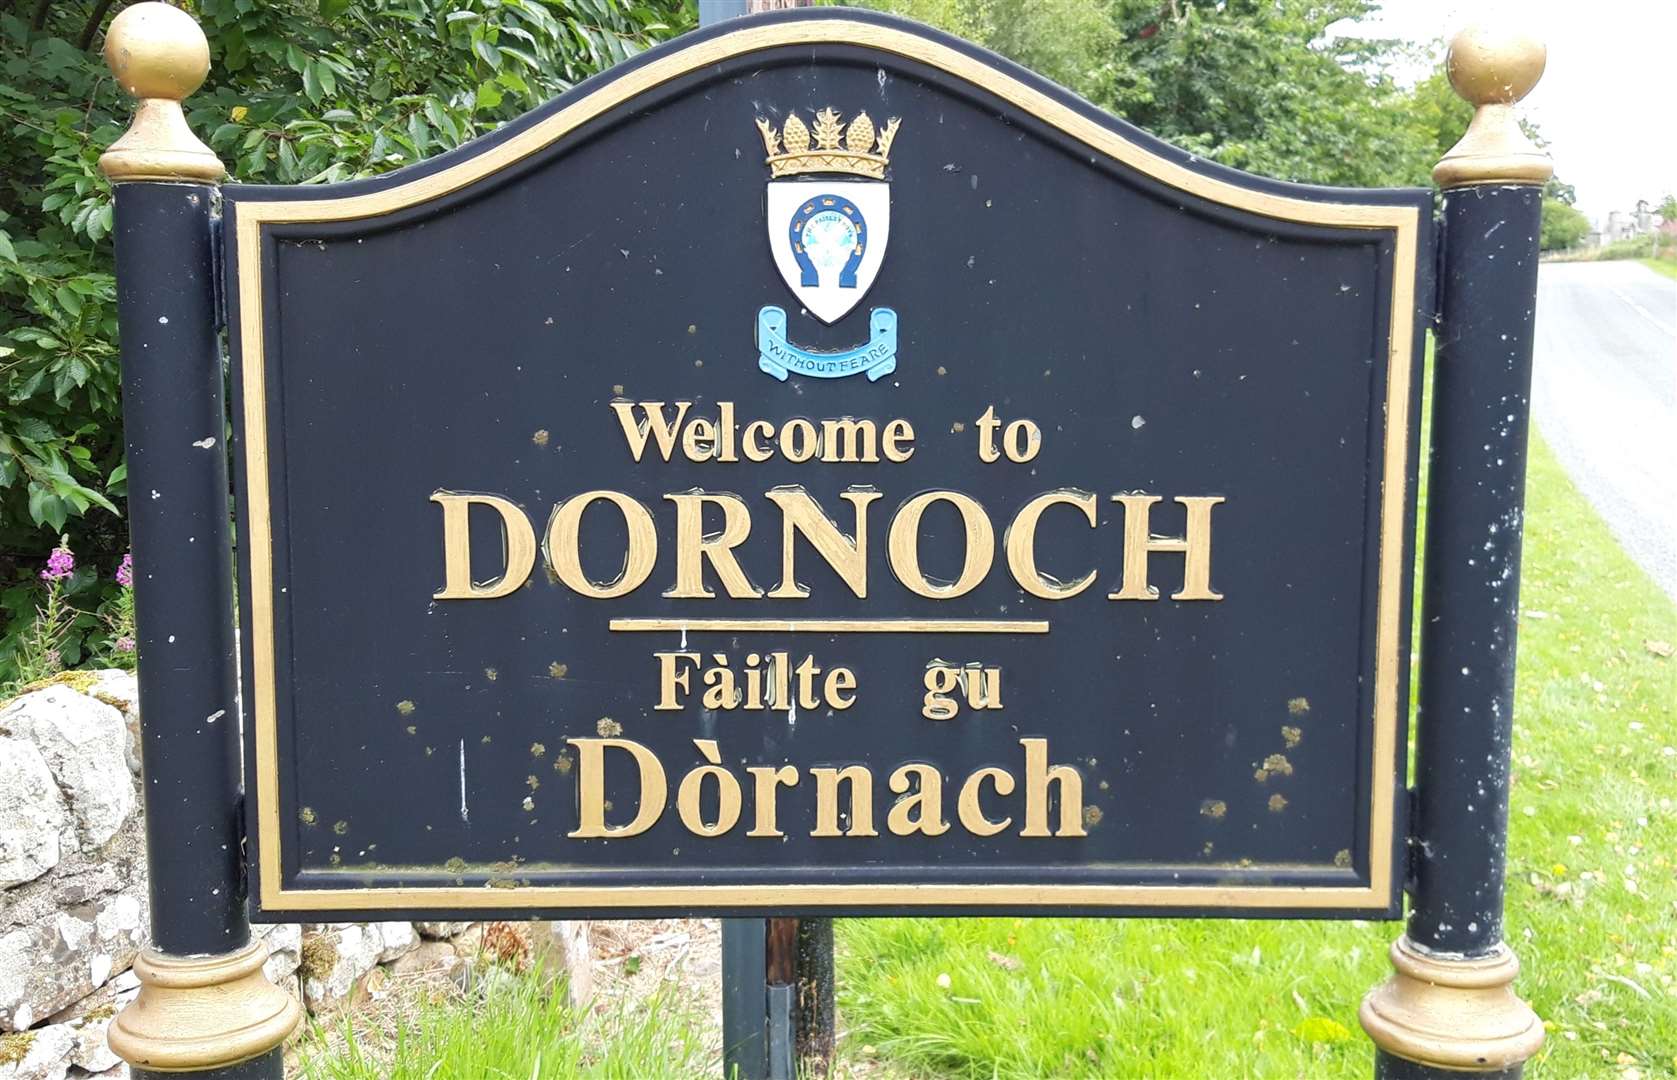 Welcome to Dornoch.